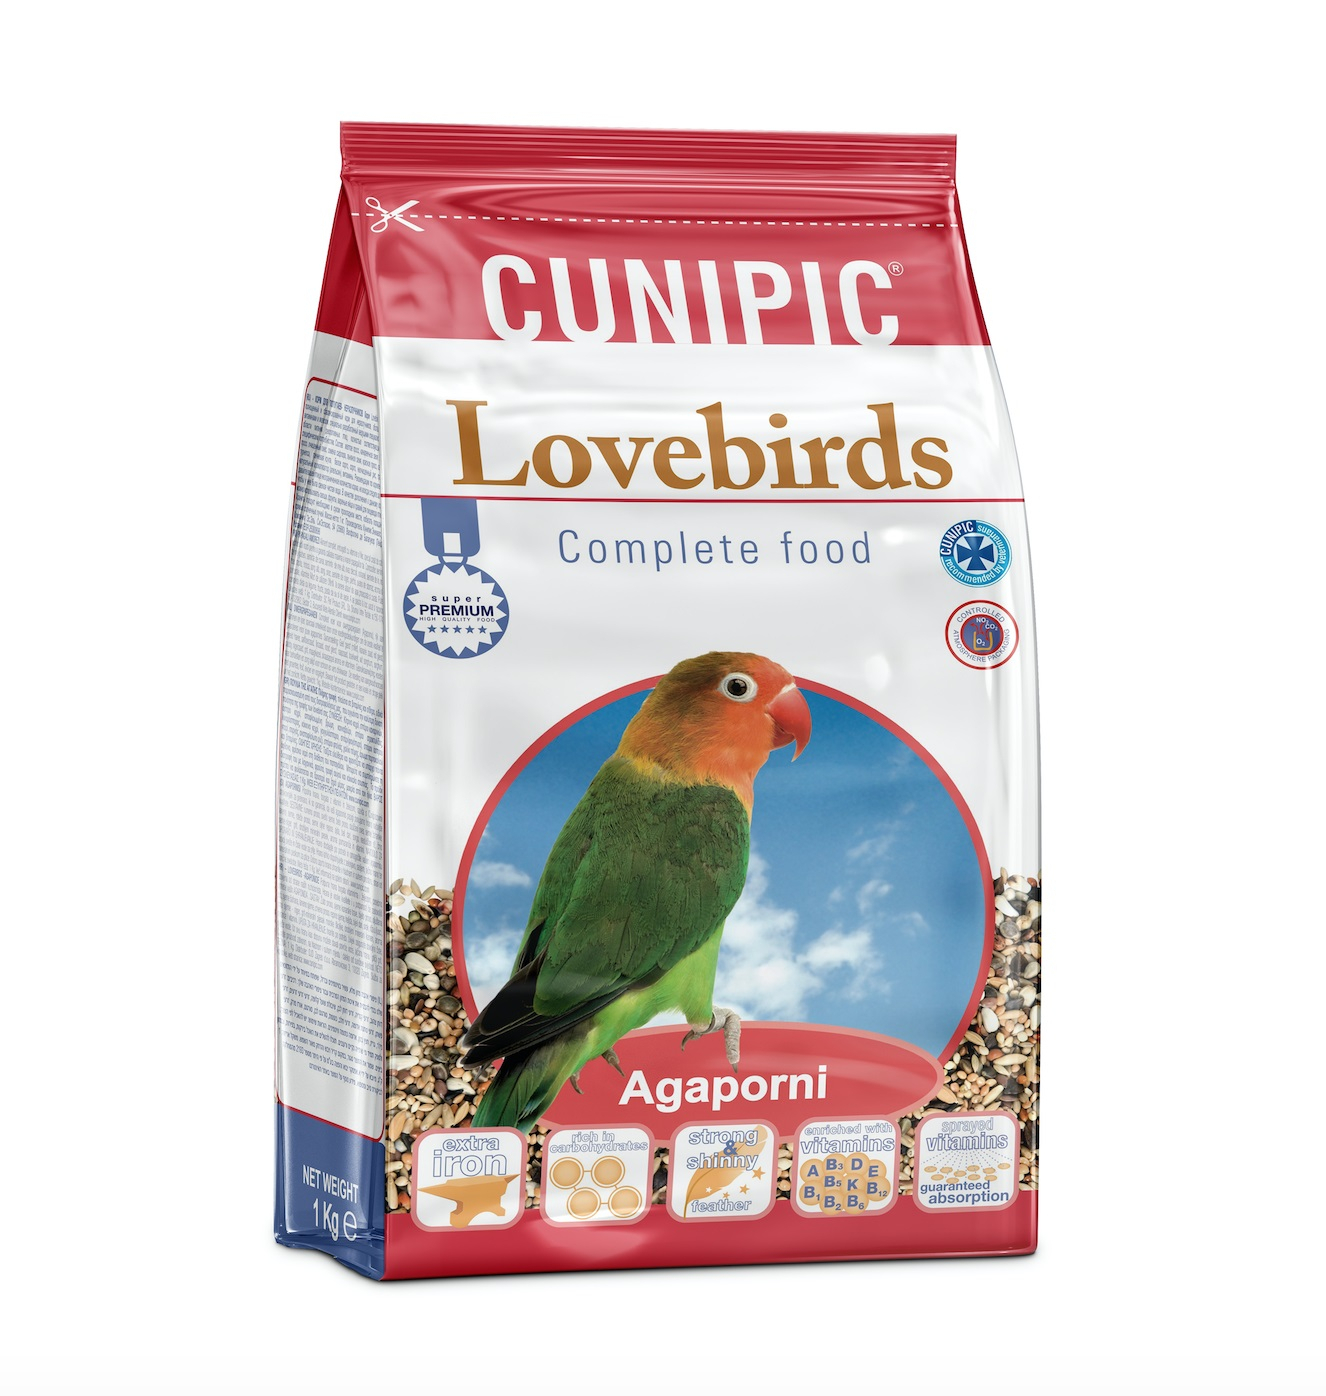 Cunipic Premium Love Birds Cunipic Alimento completo per inseparabili